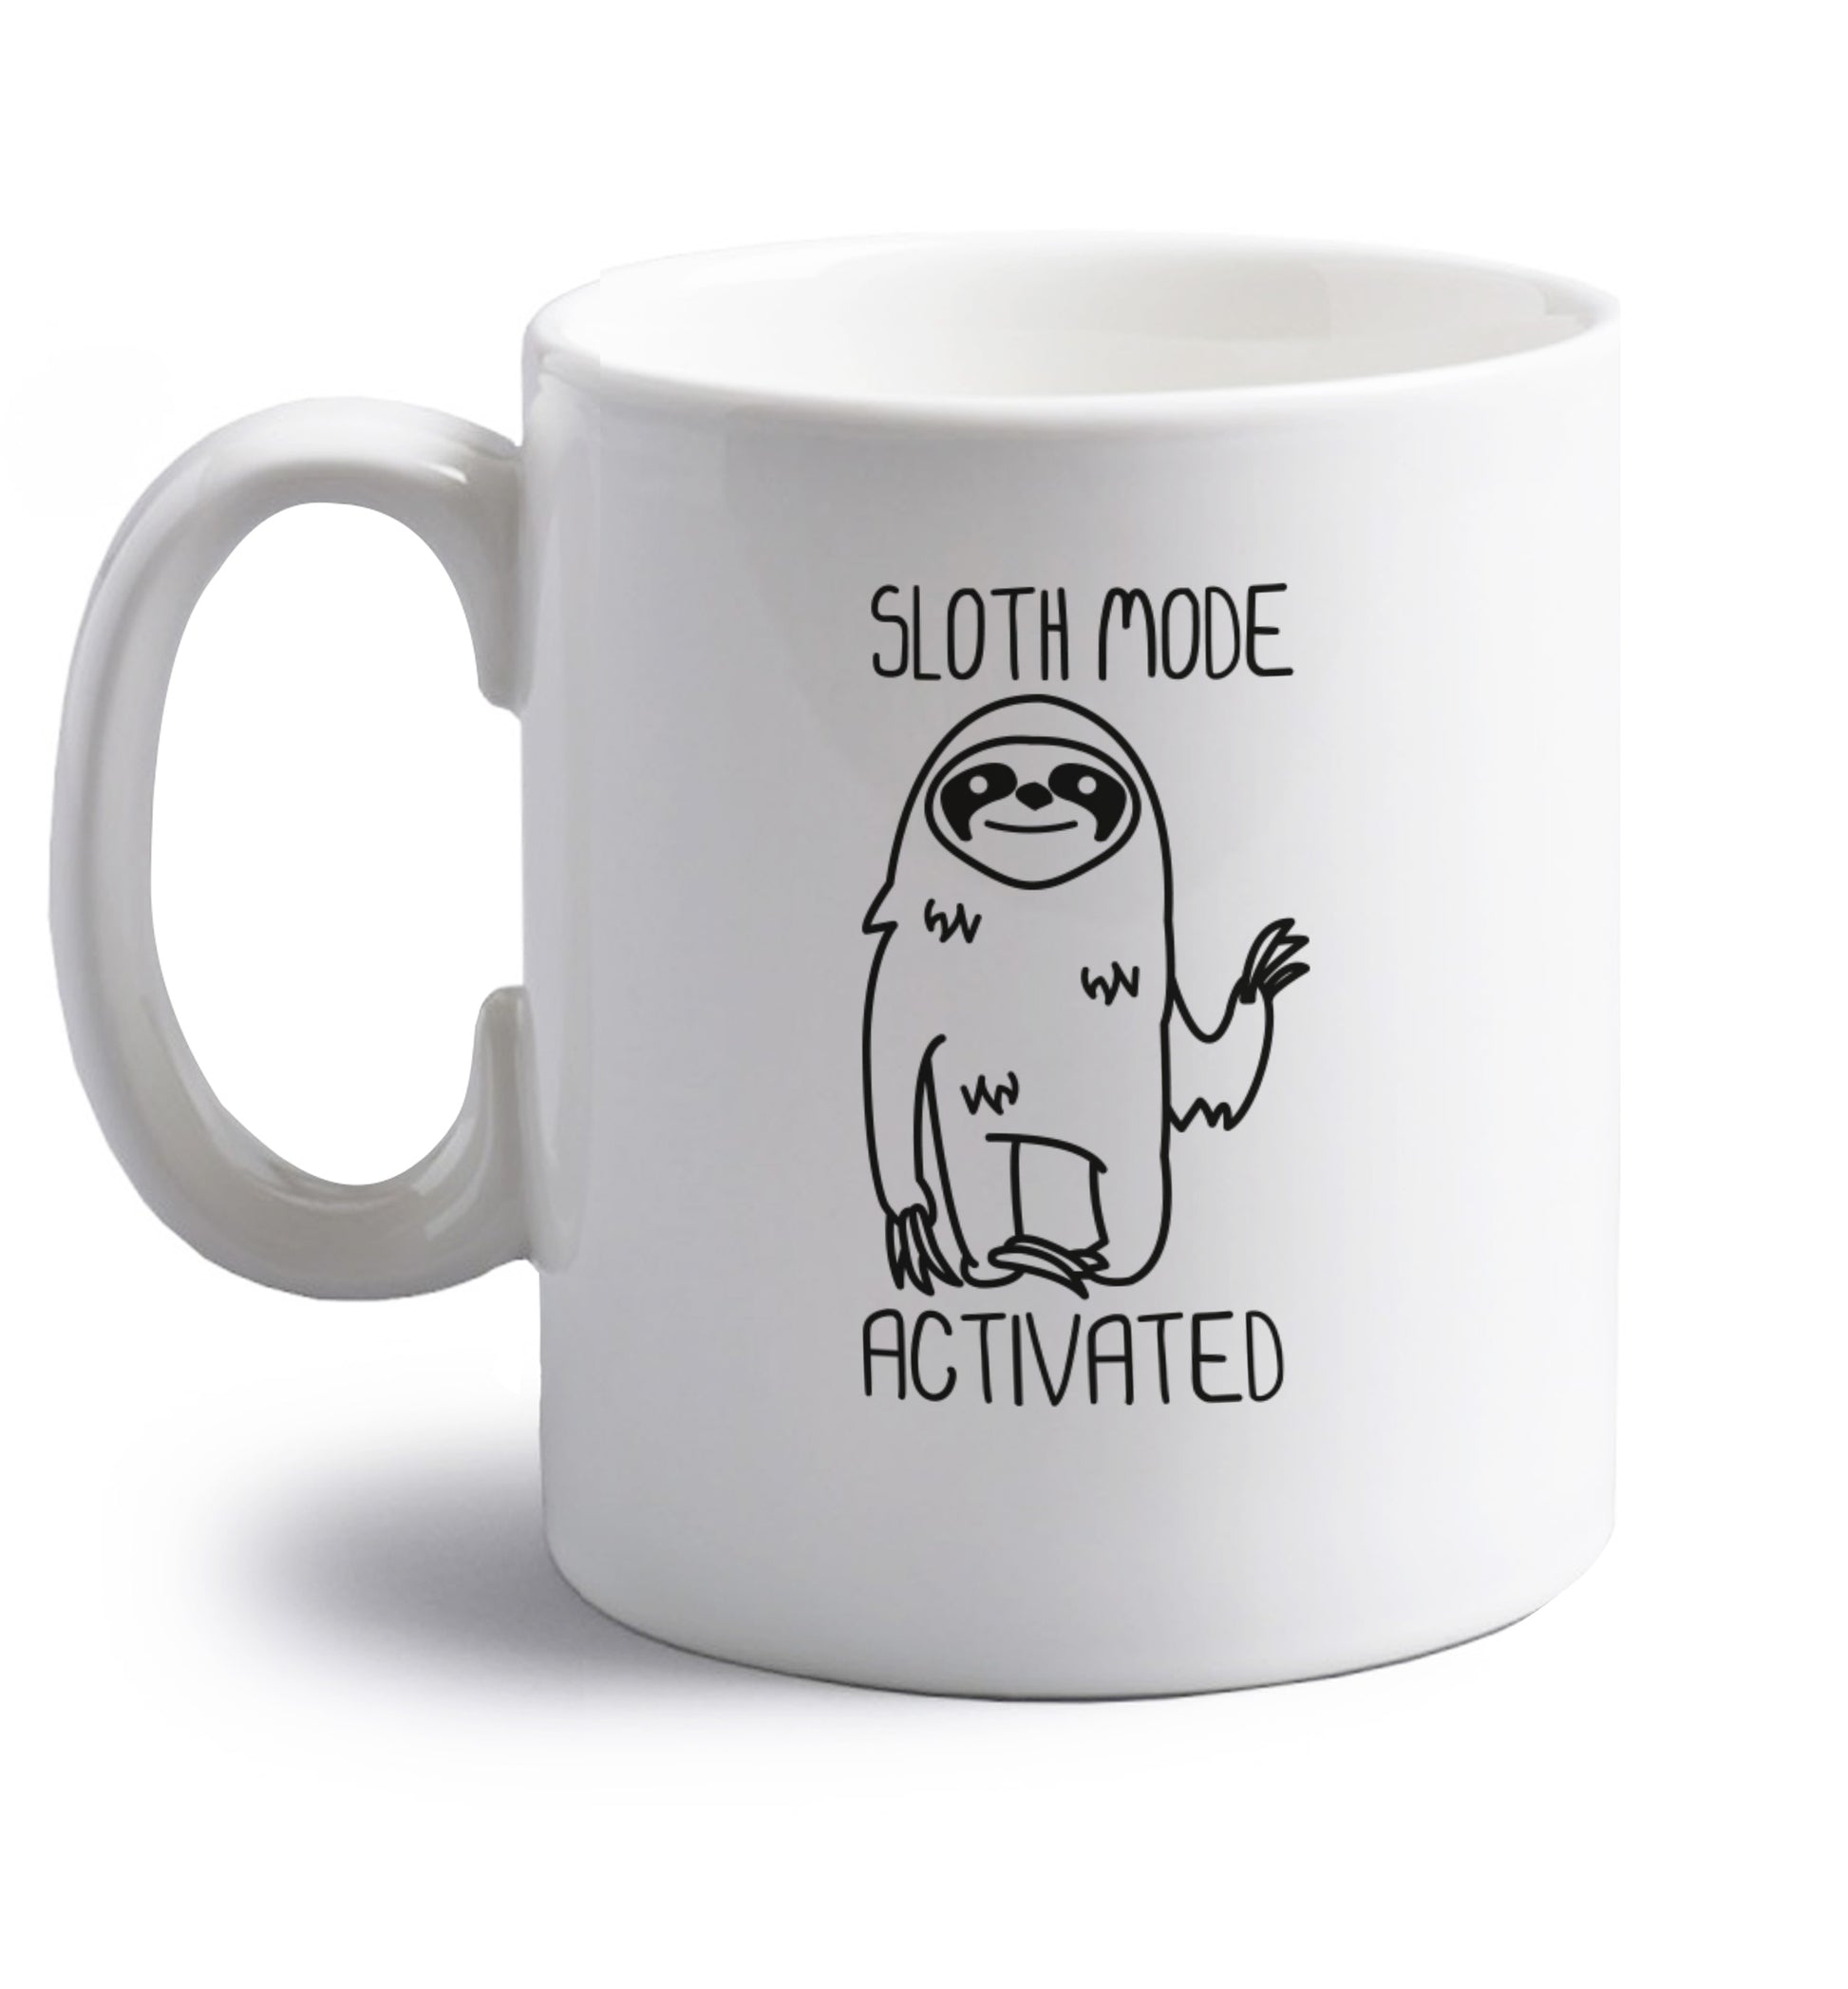 Sloth mode acitvated right handed white ceramic mug 